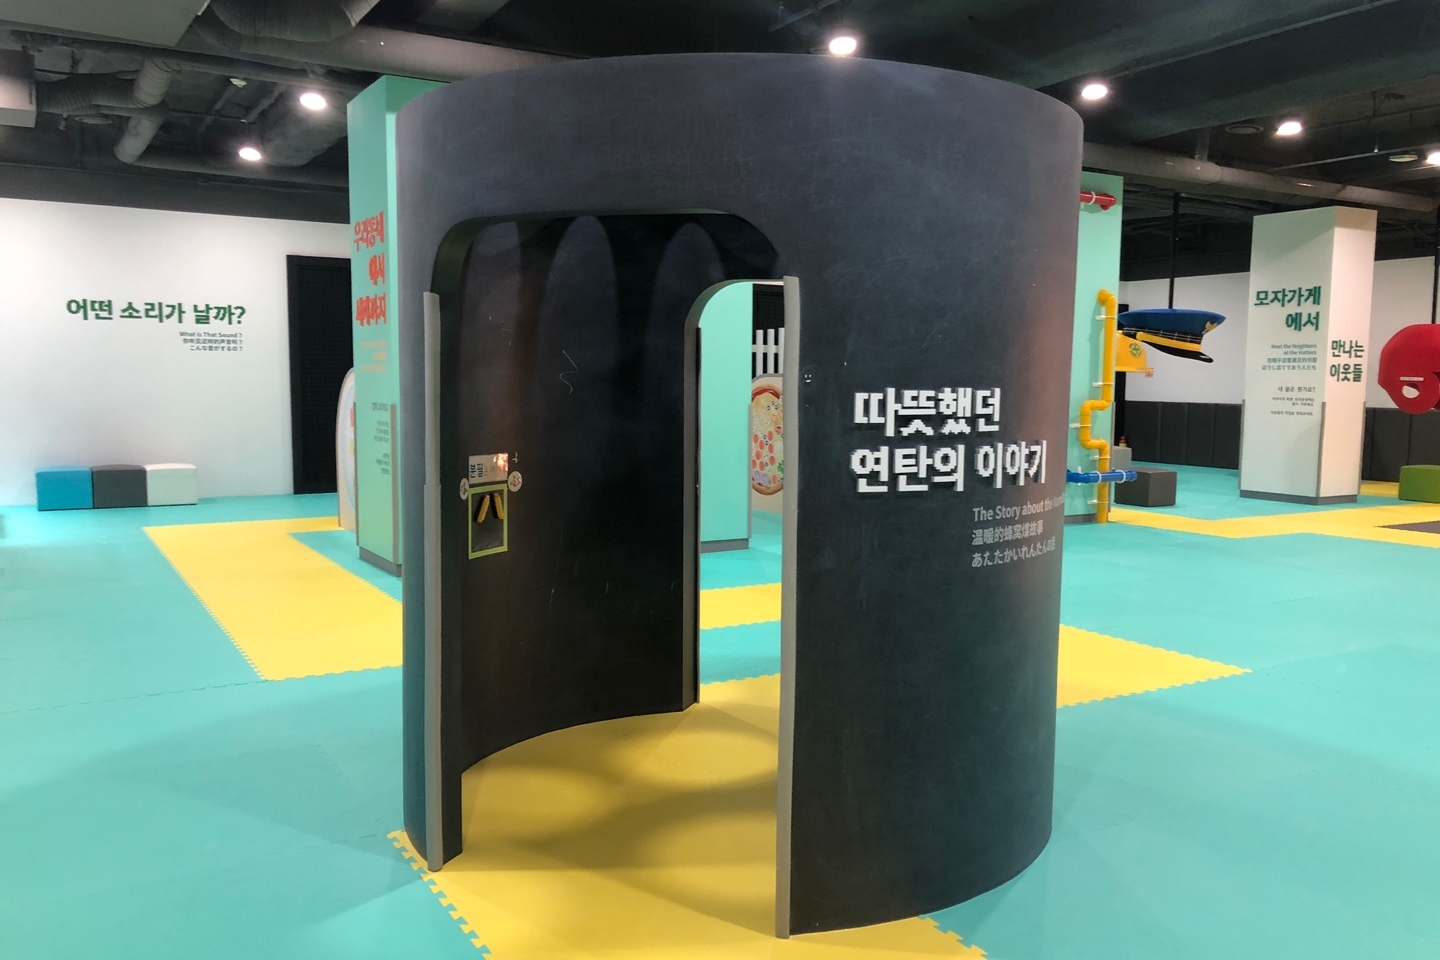 Seoul Urban Life Museum 4 : A large scale of briquette model for children's exhibition
